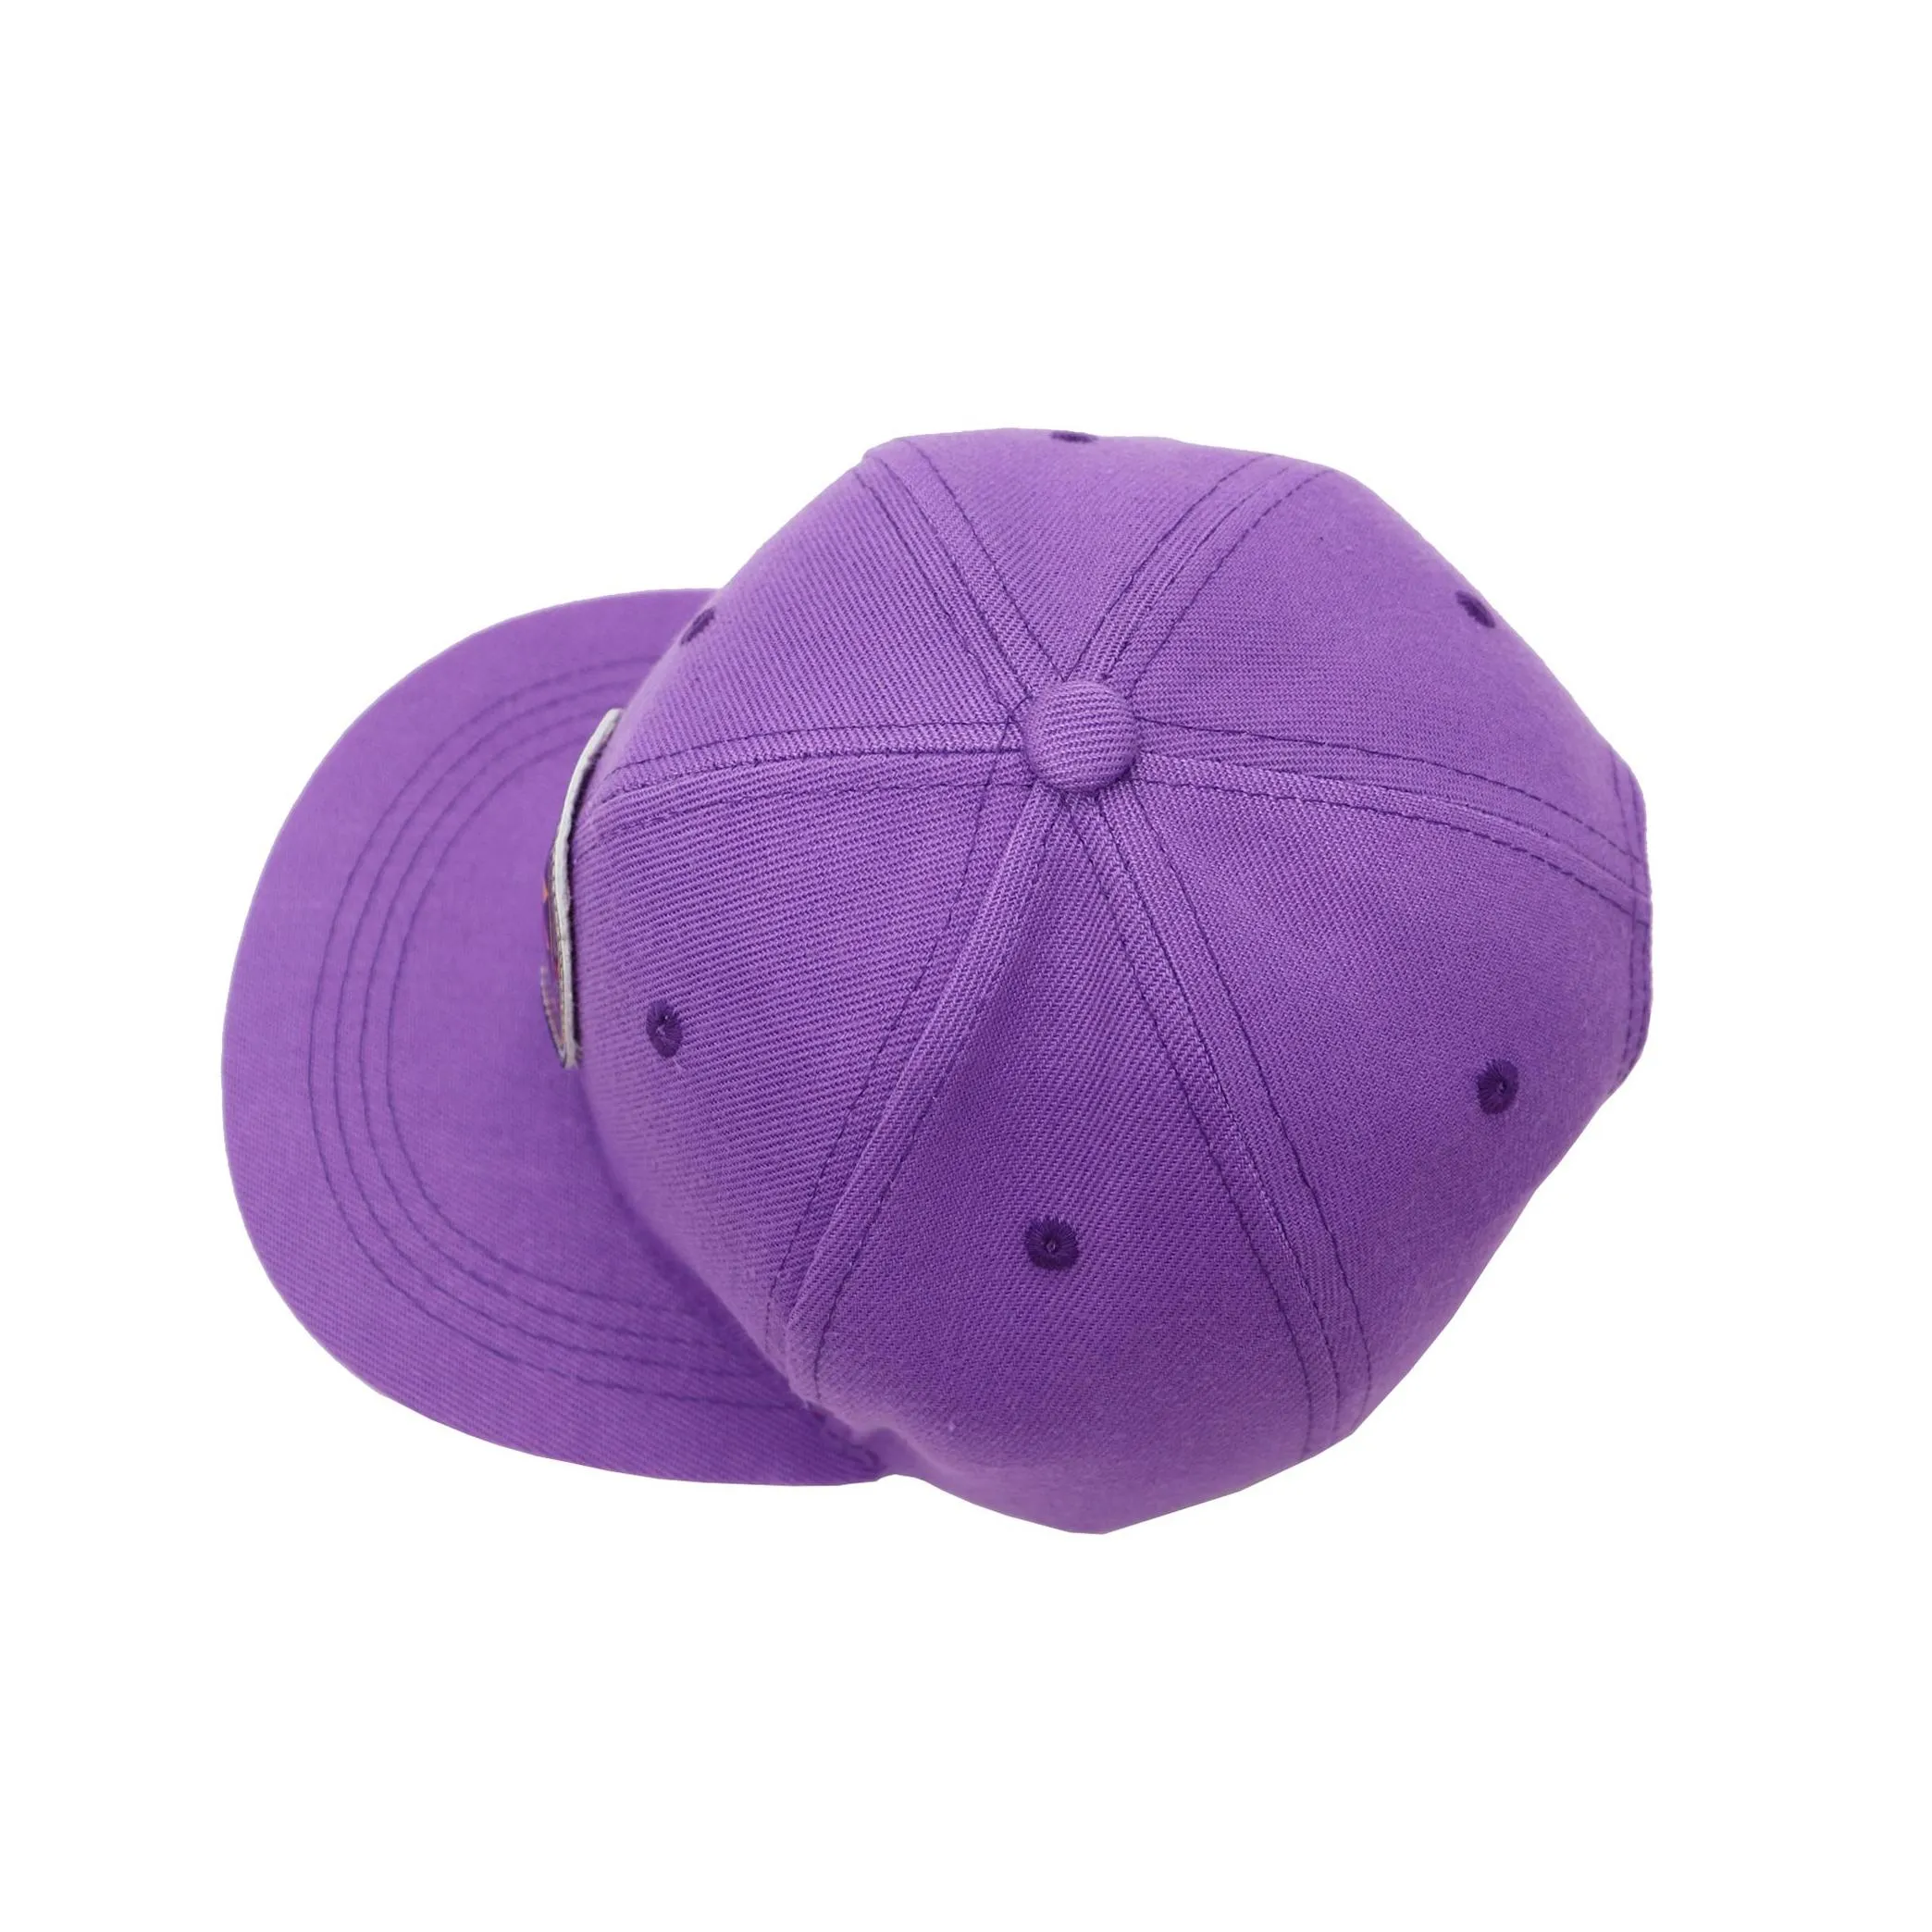 Golden State Baseball Cap Adjustable Flat Brim Baseball Cap Snapback Sports Fans Basketball Hat for Men and Women